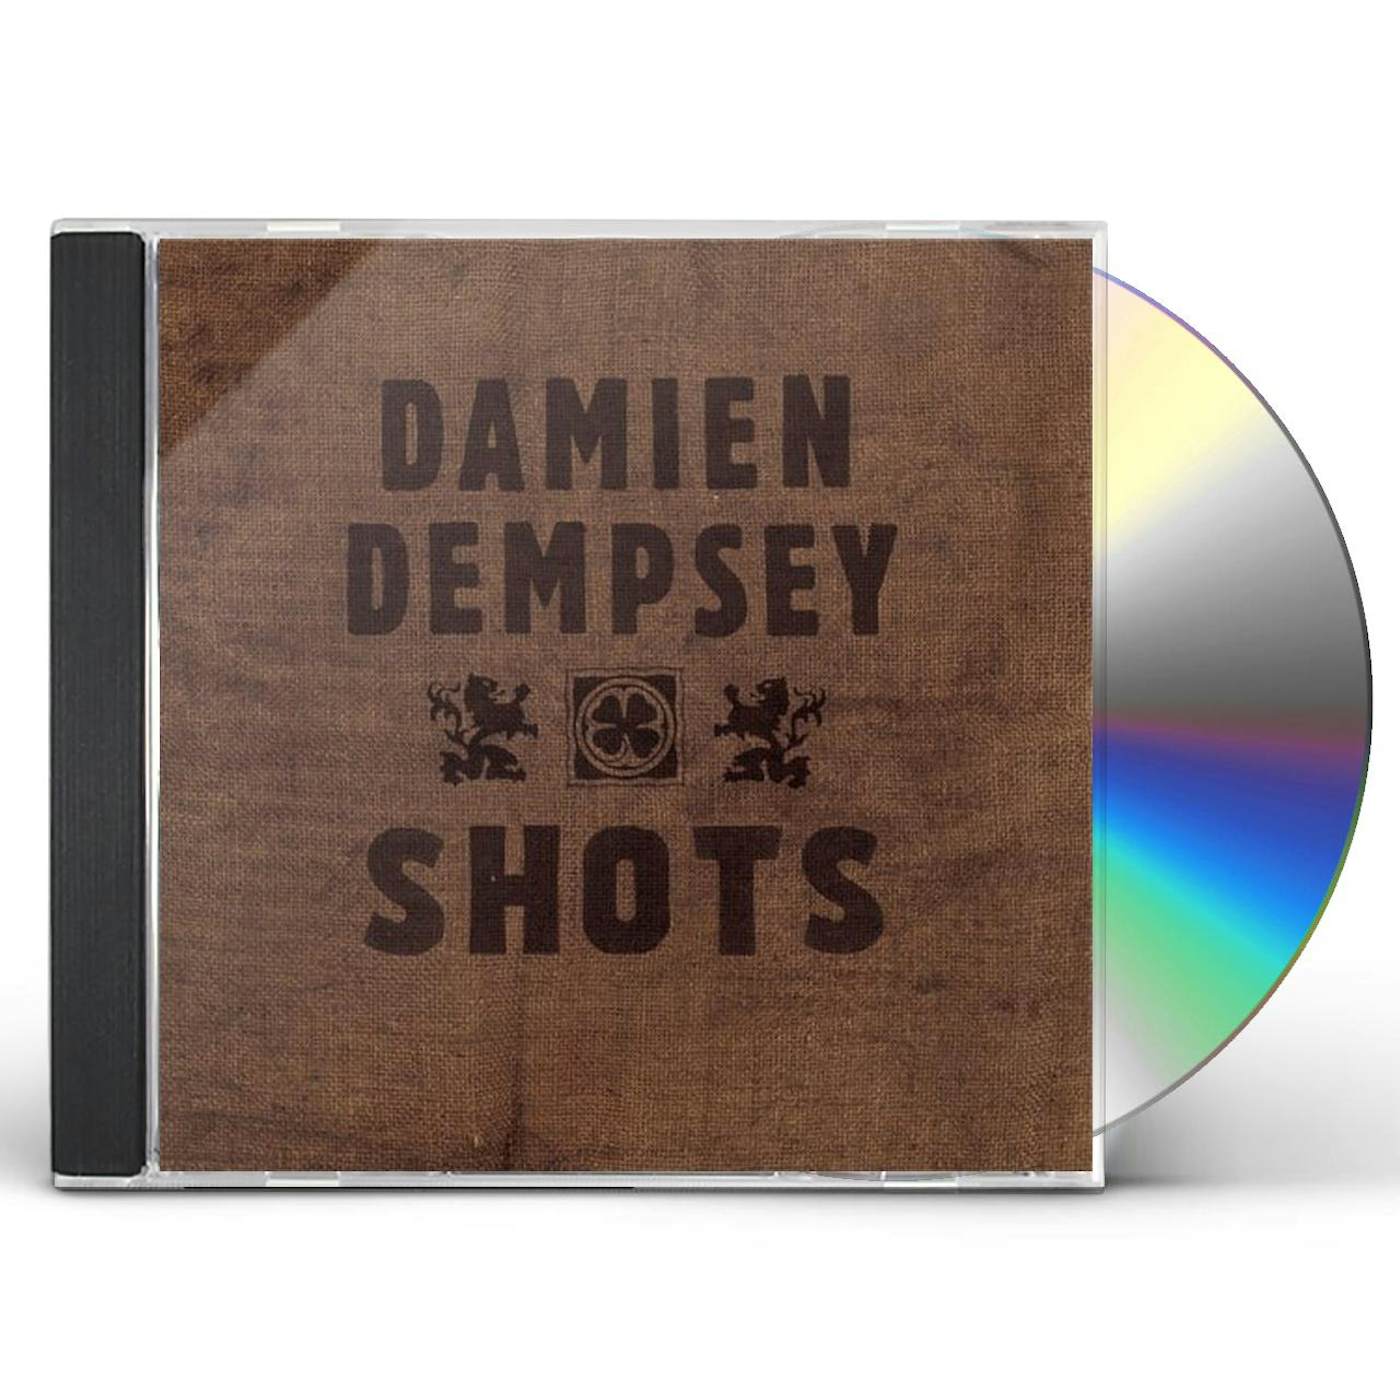 Damien Dempsey SHOTS CD